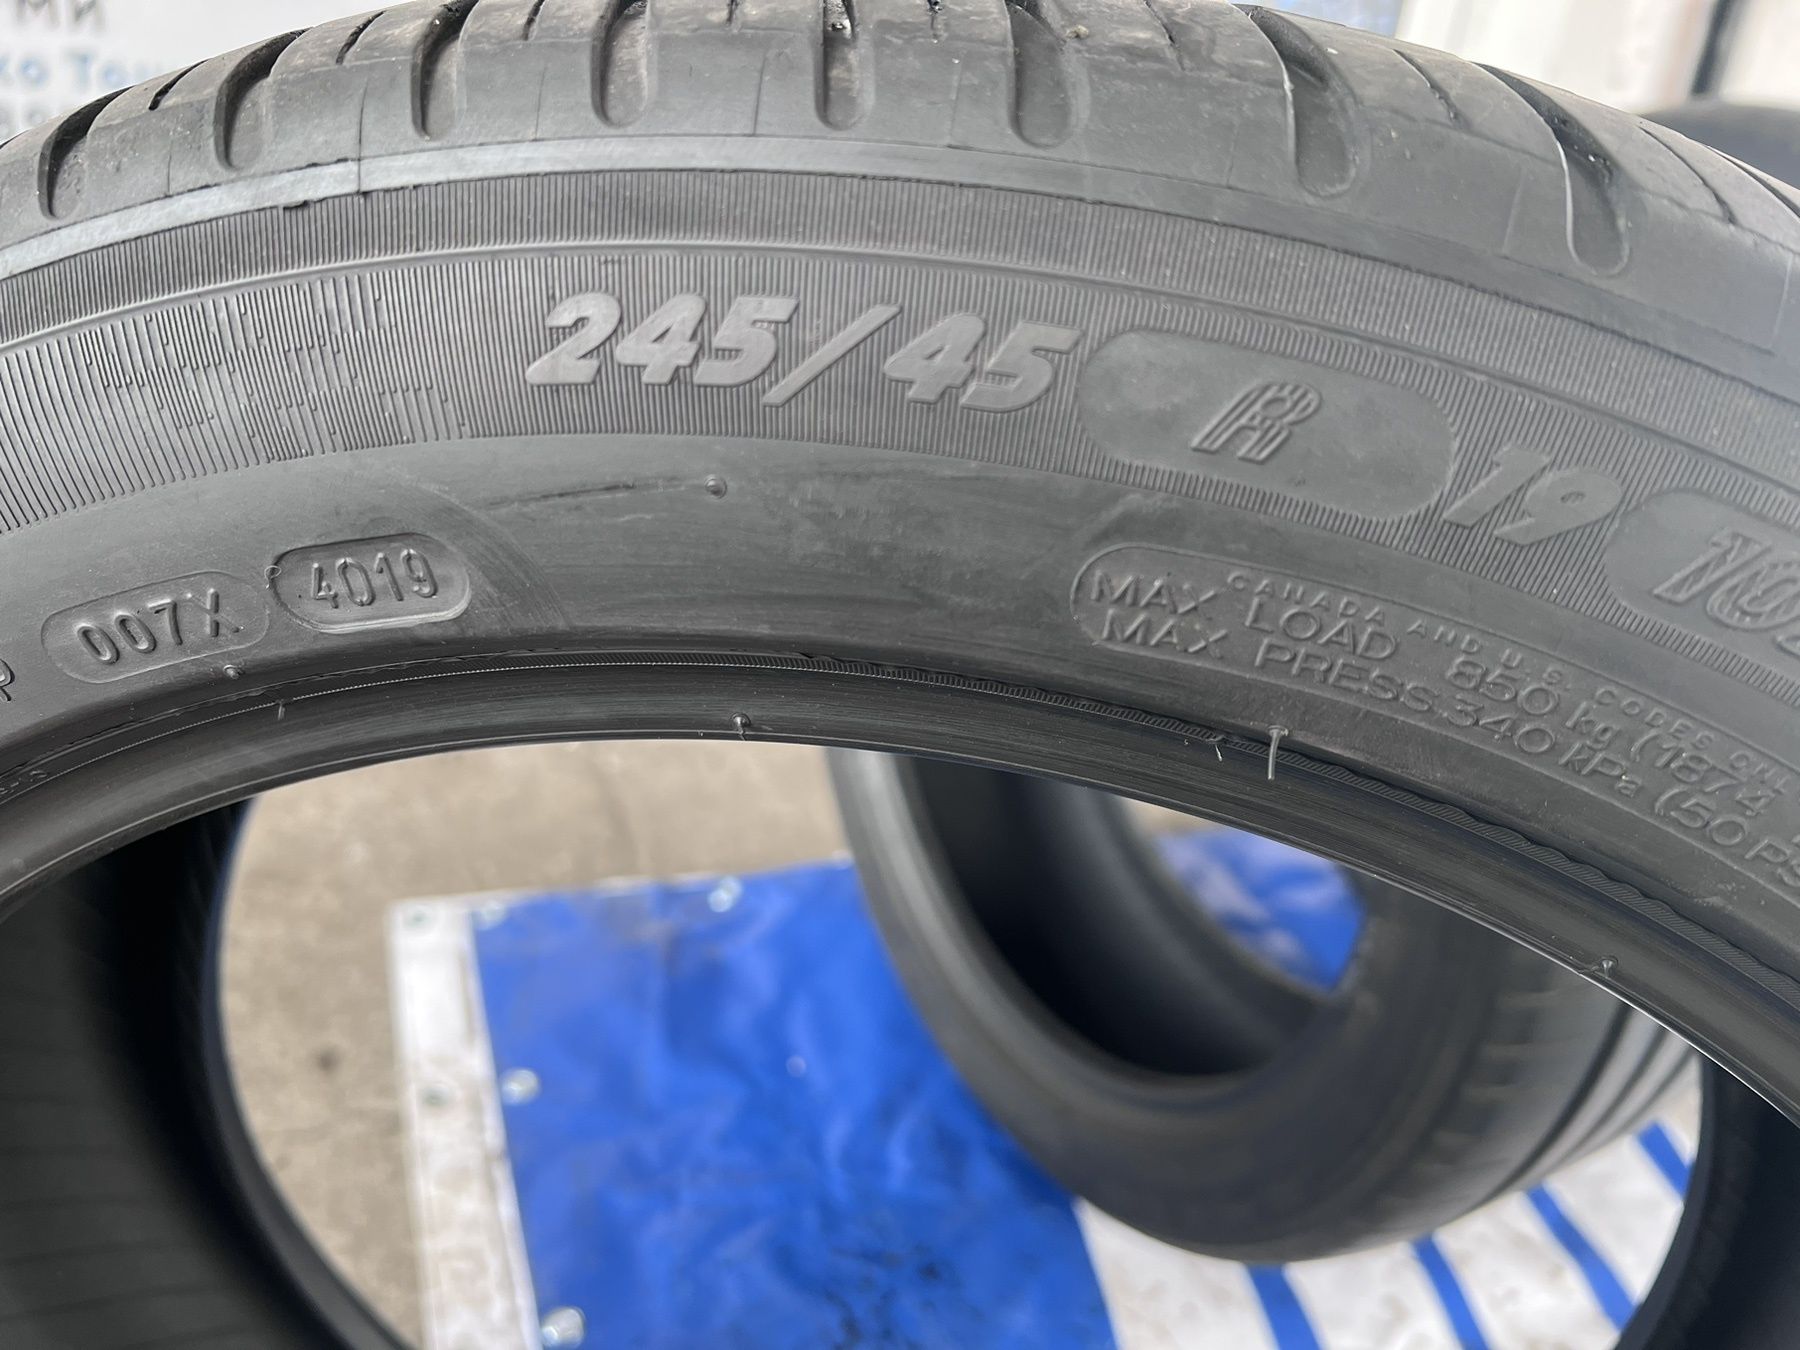 Летни гуми 245/45 R19 Michelin/Pirelli(рънфлад)